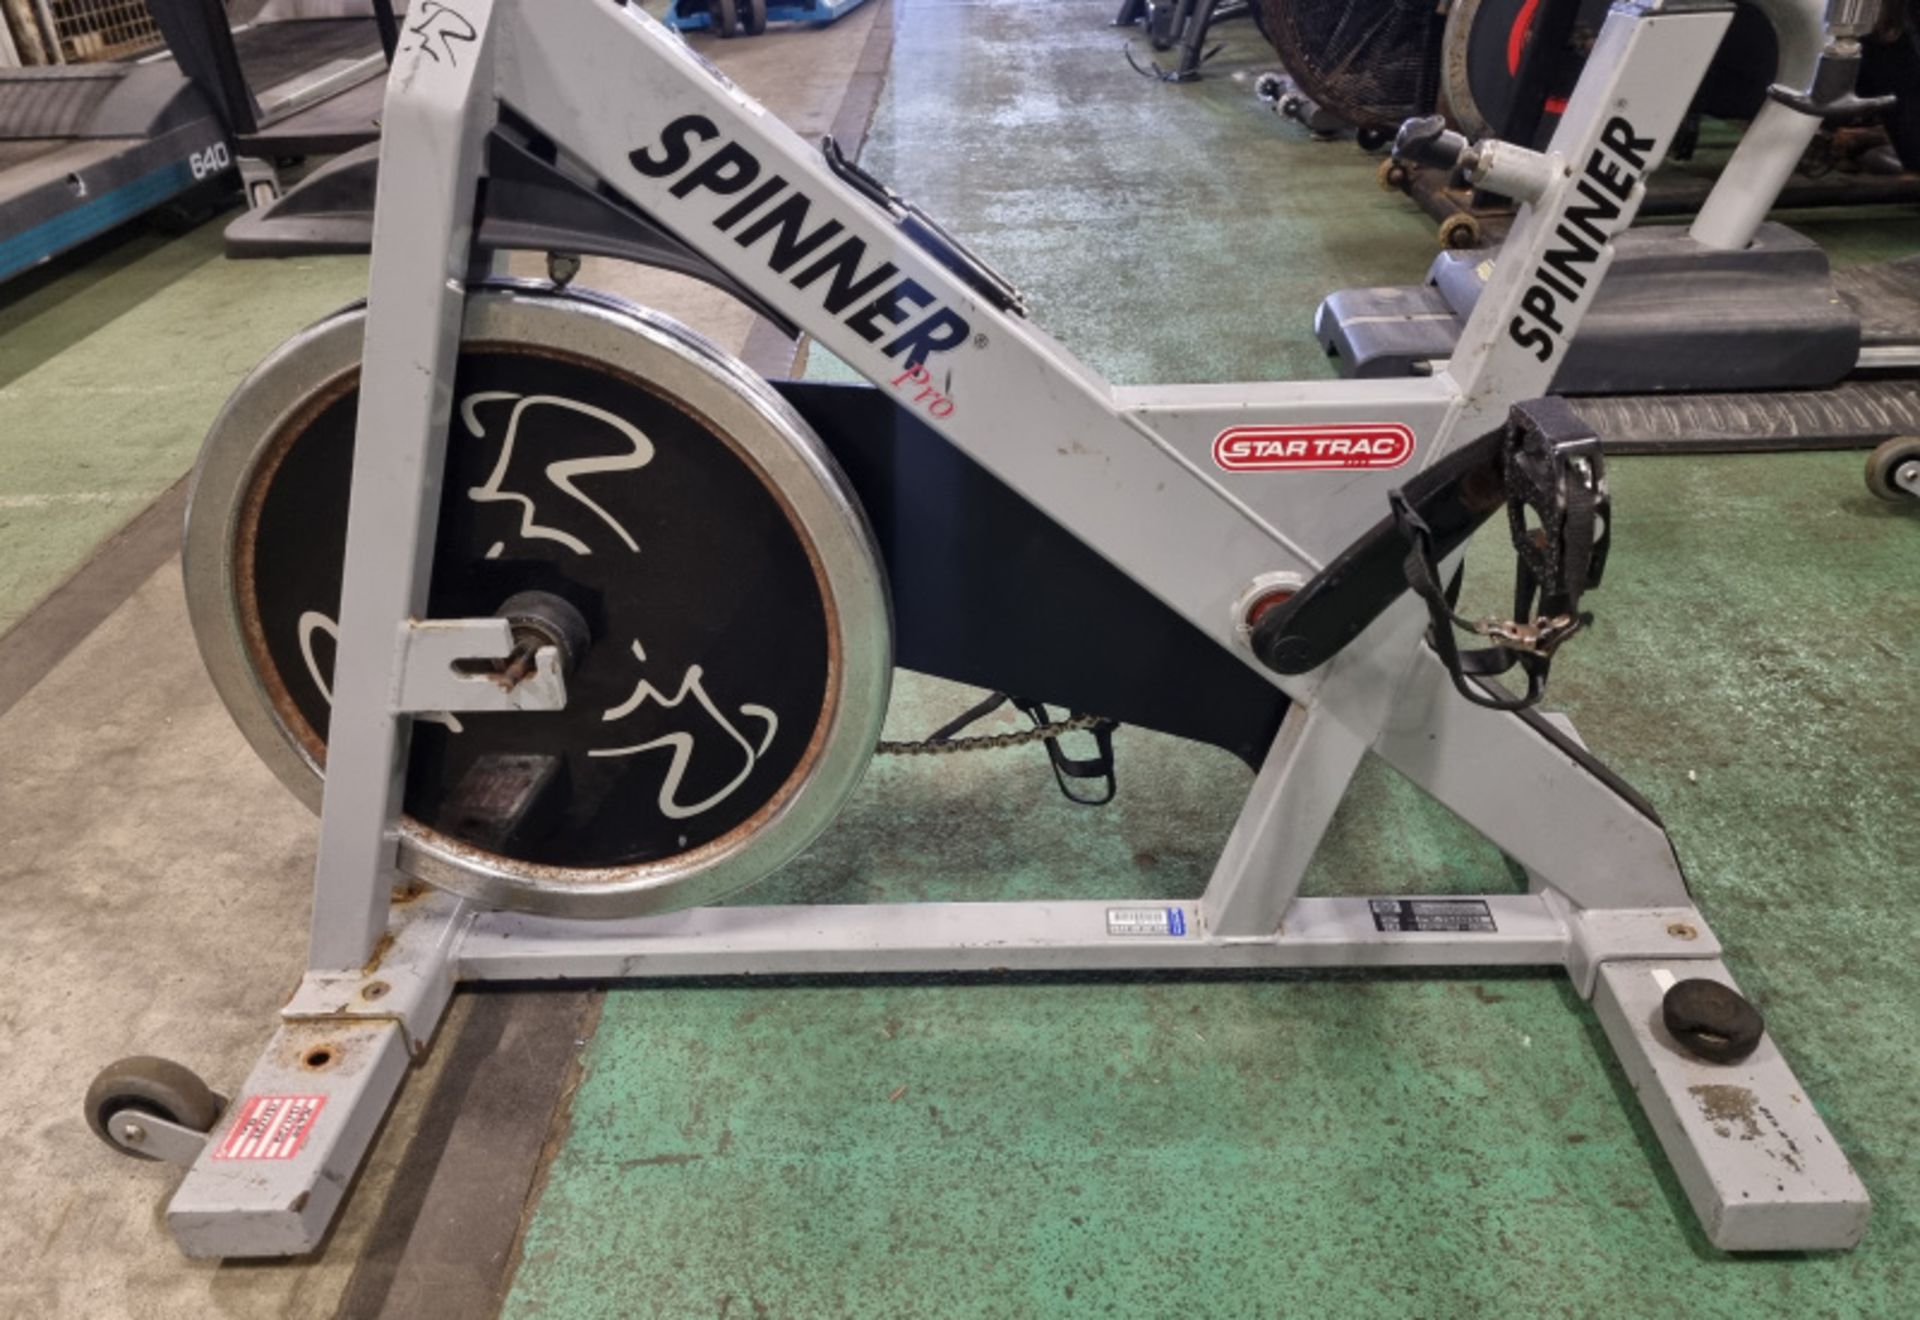 Star Trac spinner pro exercise bike - Image 5 of 7